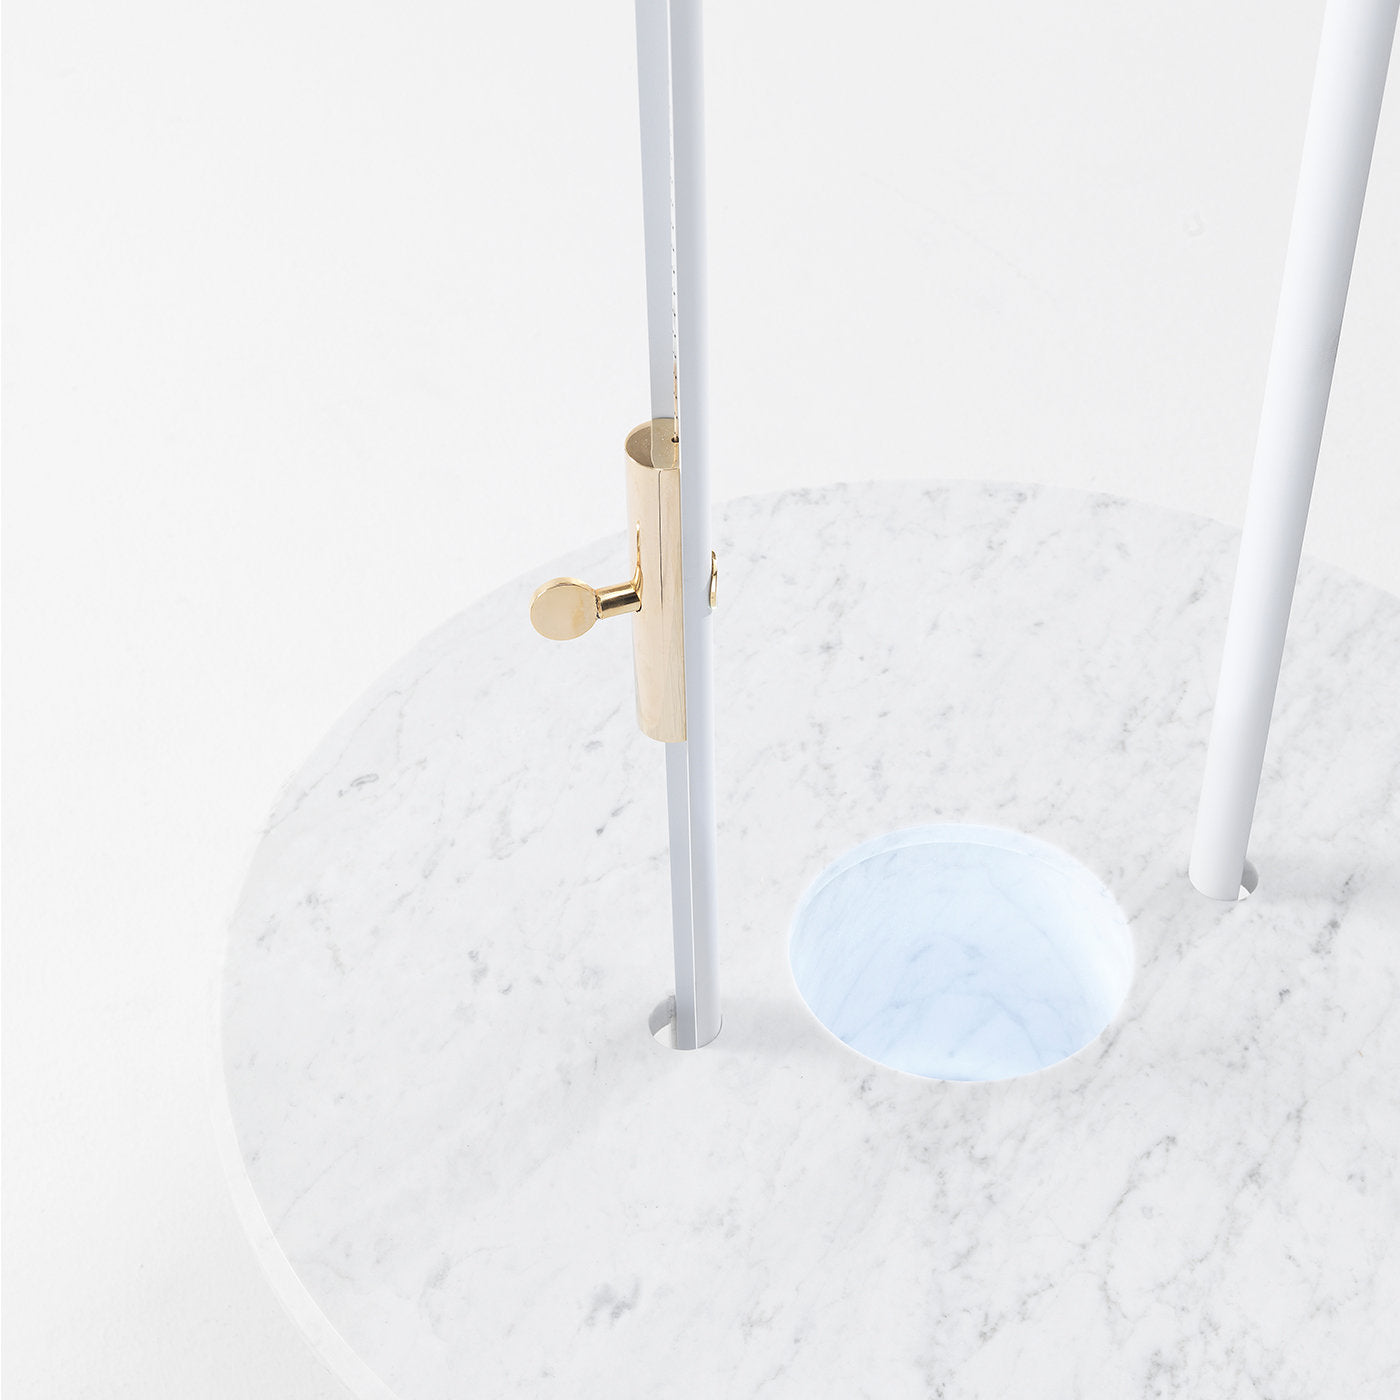 SURANDE FLOOR LAMP - Design by Alessandro Zambelli - Alternative view 3